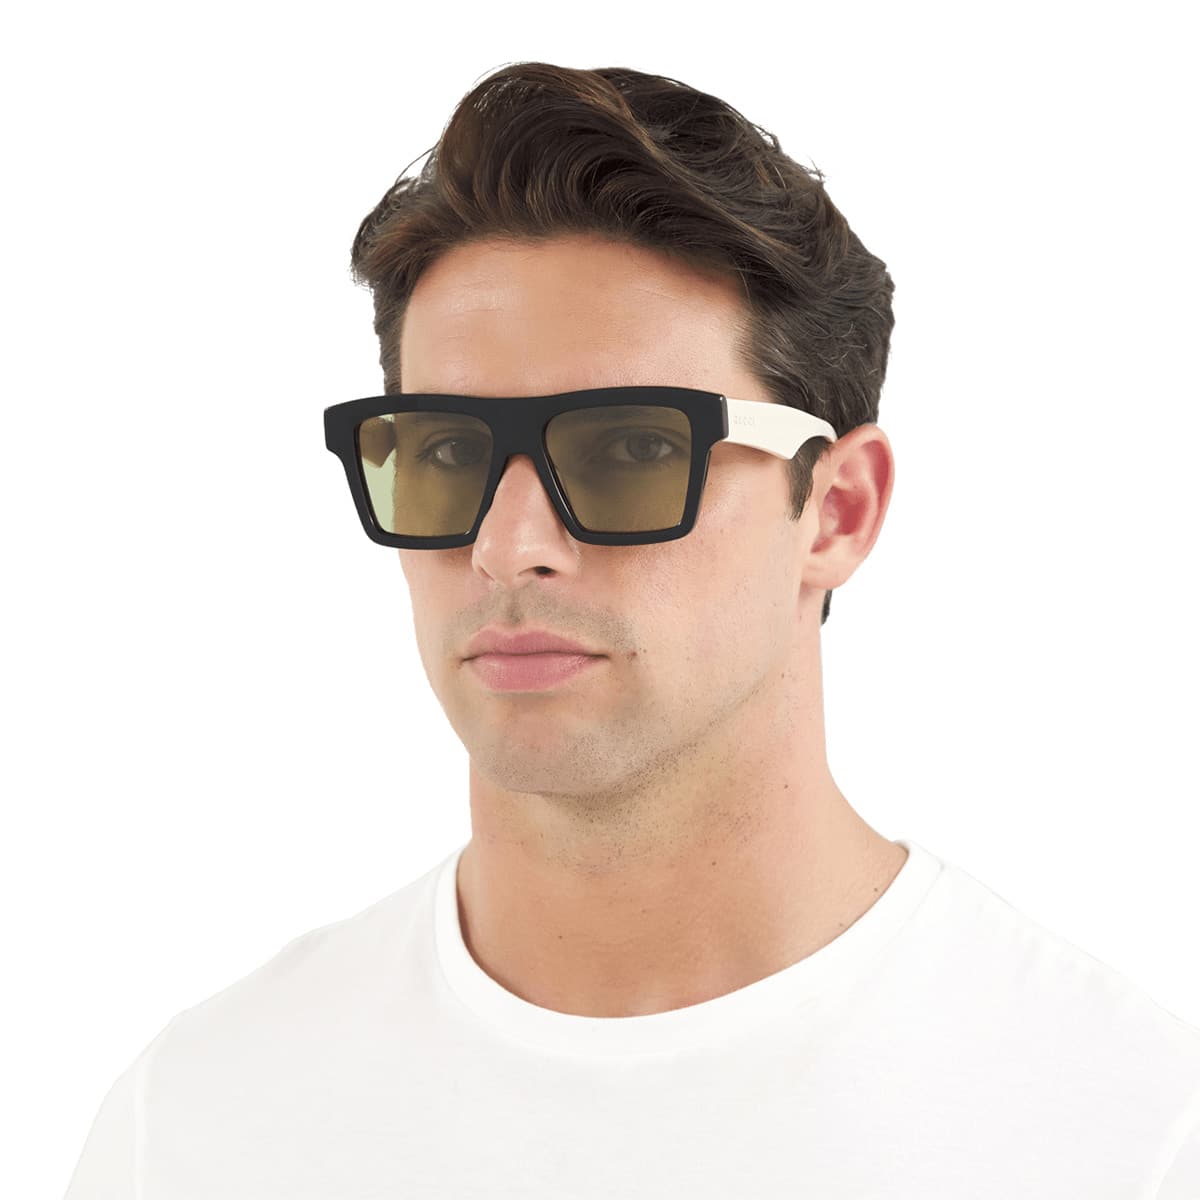 Men's stylish Gucci glasses in black and white